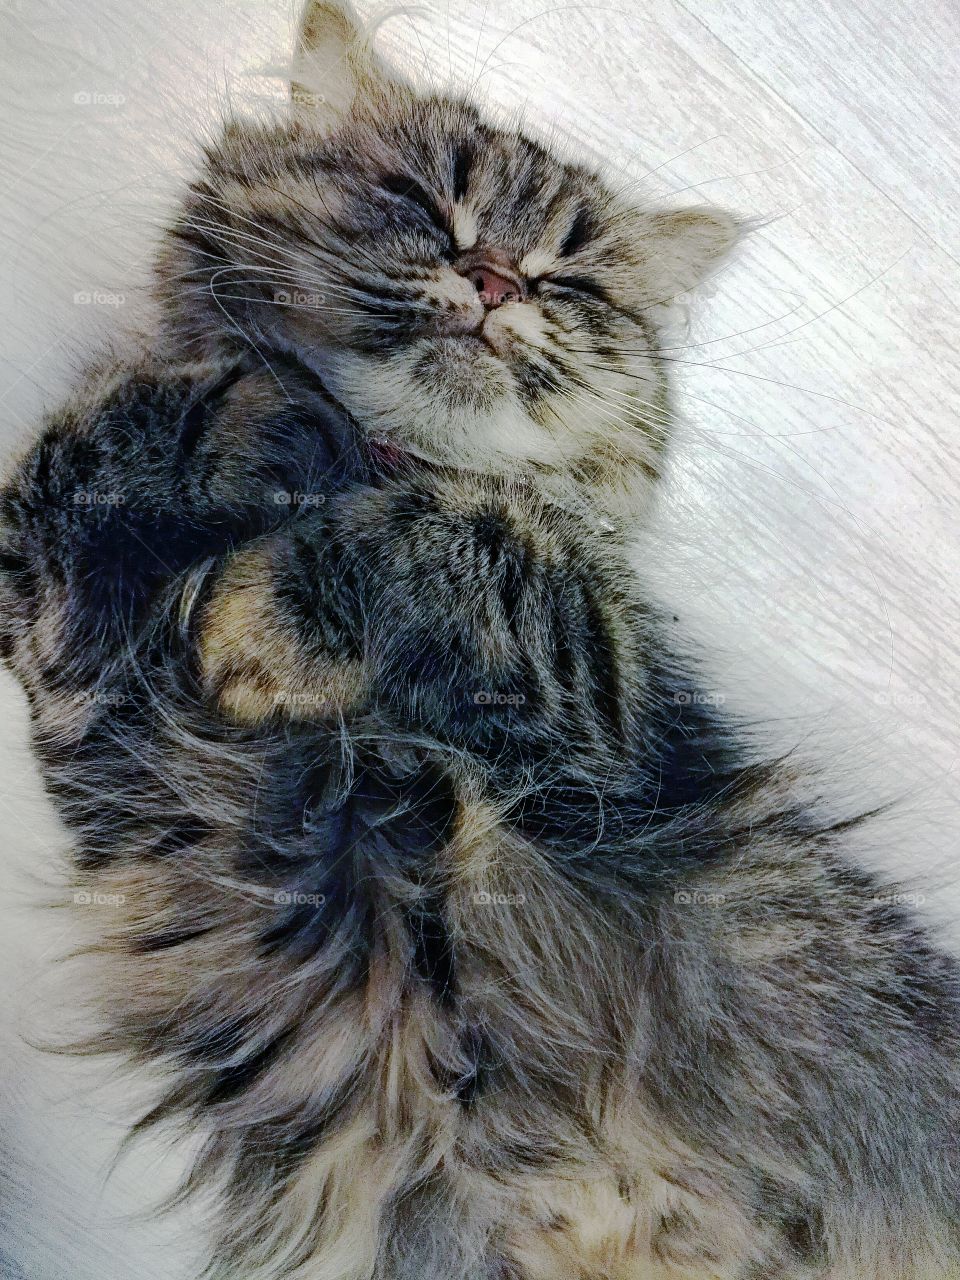 sleepy lazy sweet fluffy cat